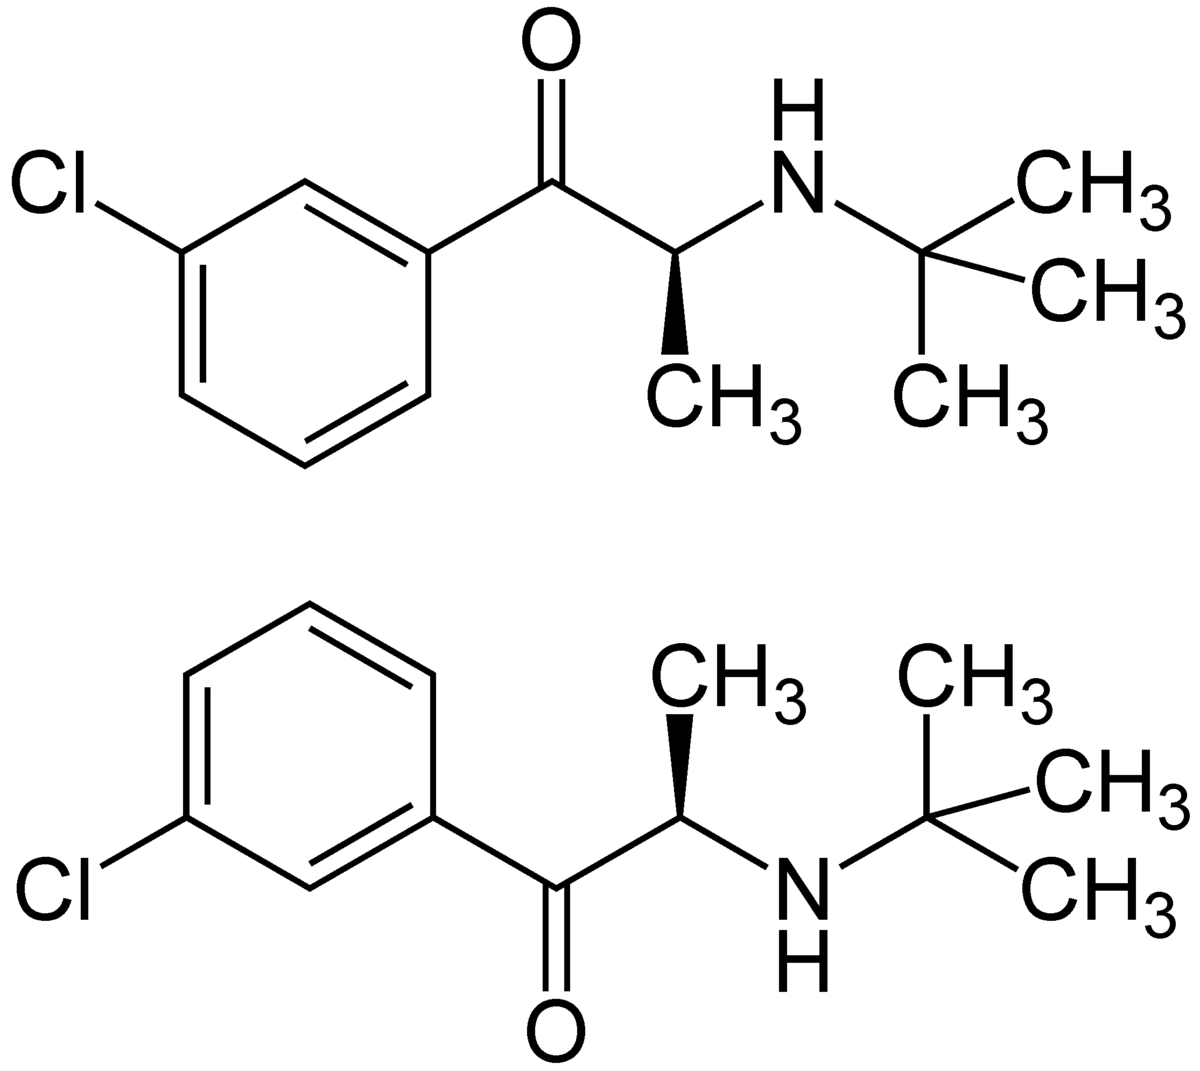 Énantiomères S (en haut) et R (en bas) du bupropione